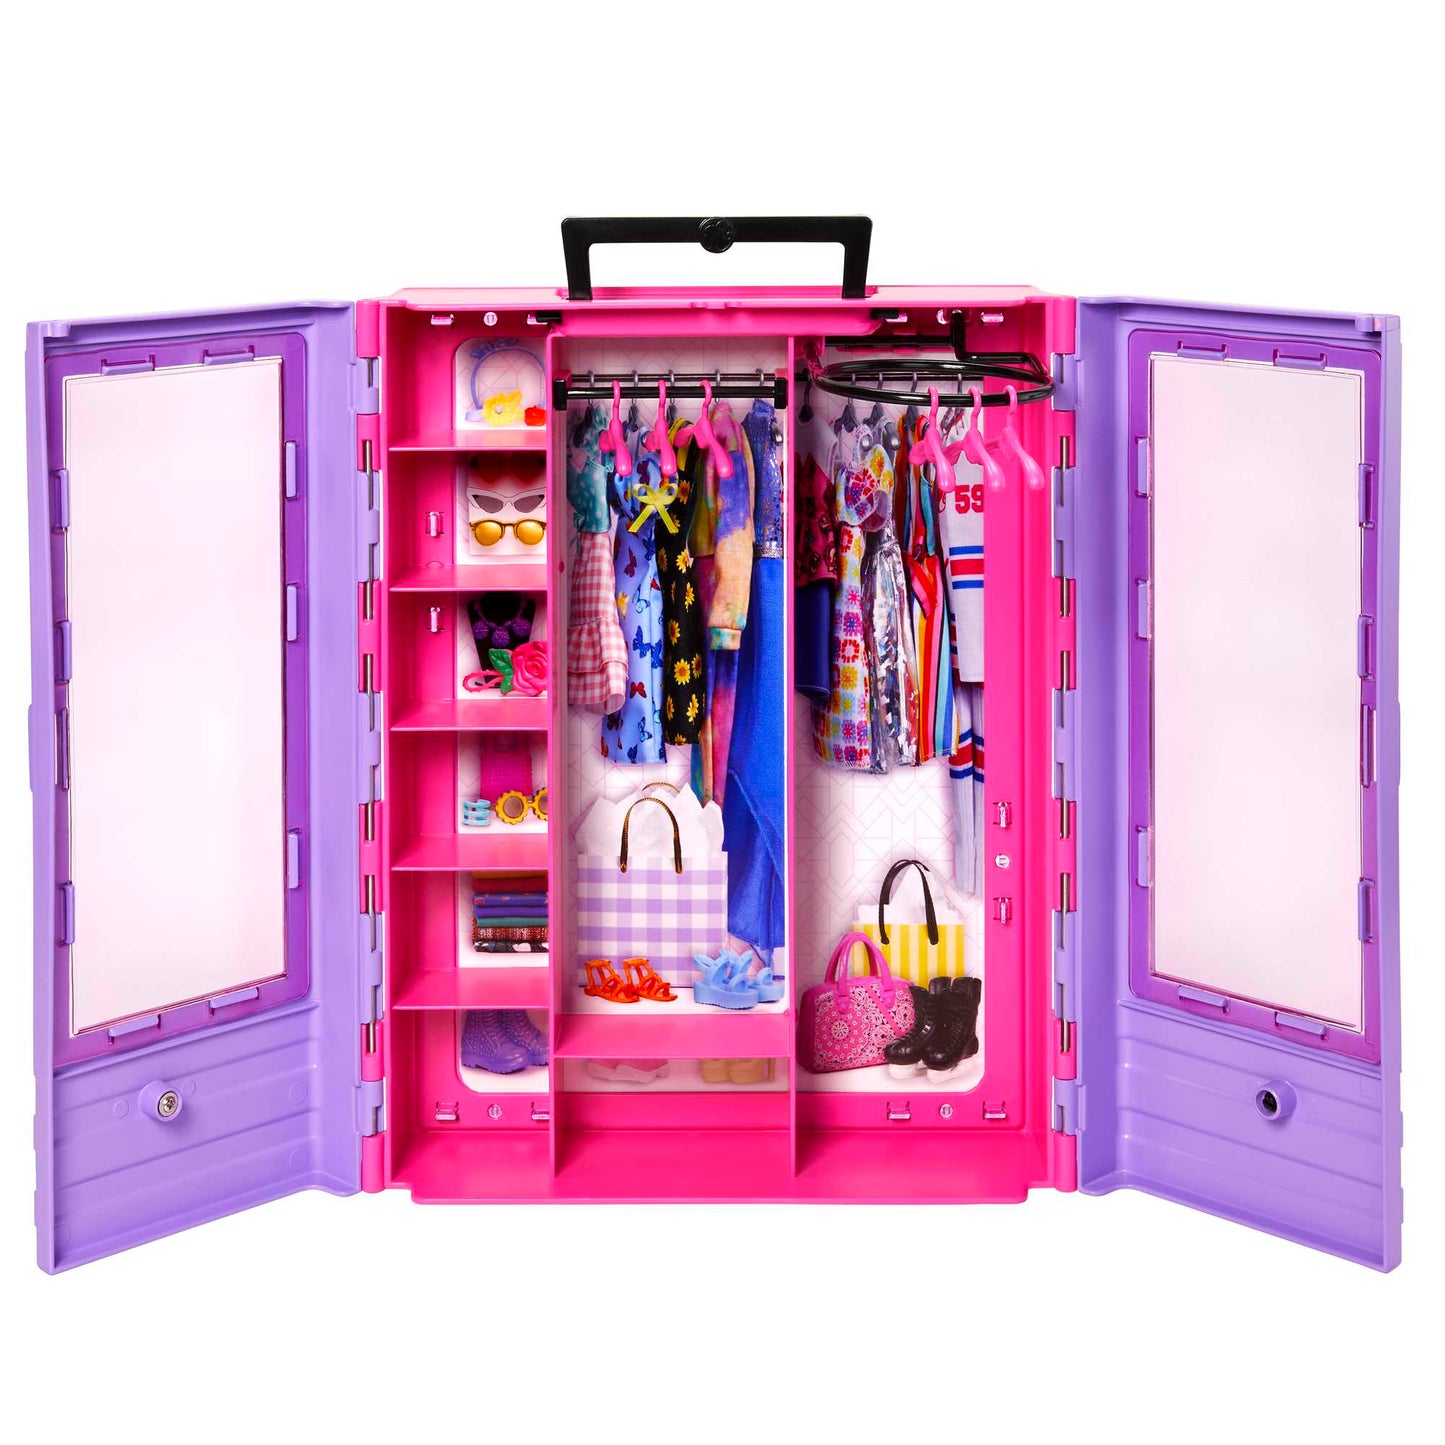 Barbie - Fashionistas Ultimate Closet Doll HJL66